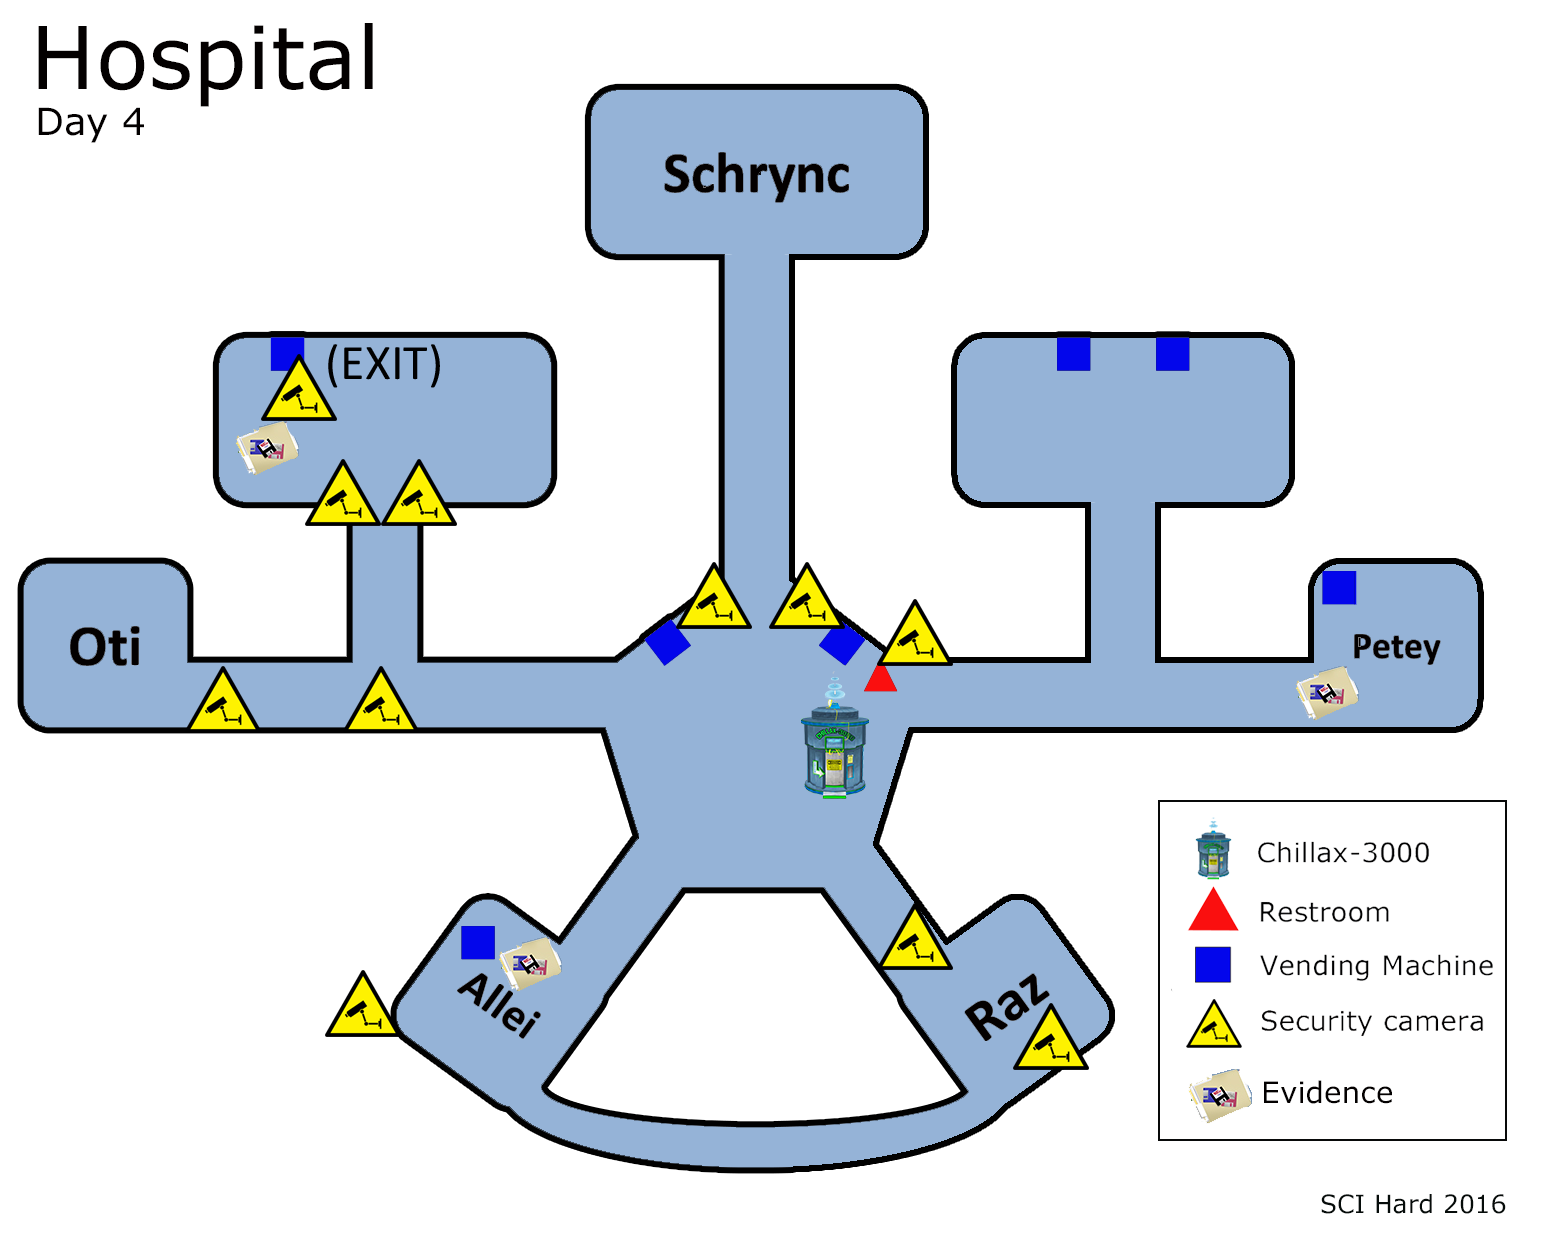 Sci Hard Hospital Map Day 4